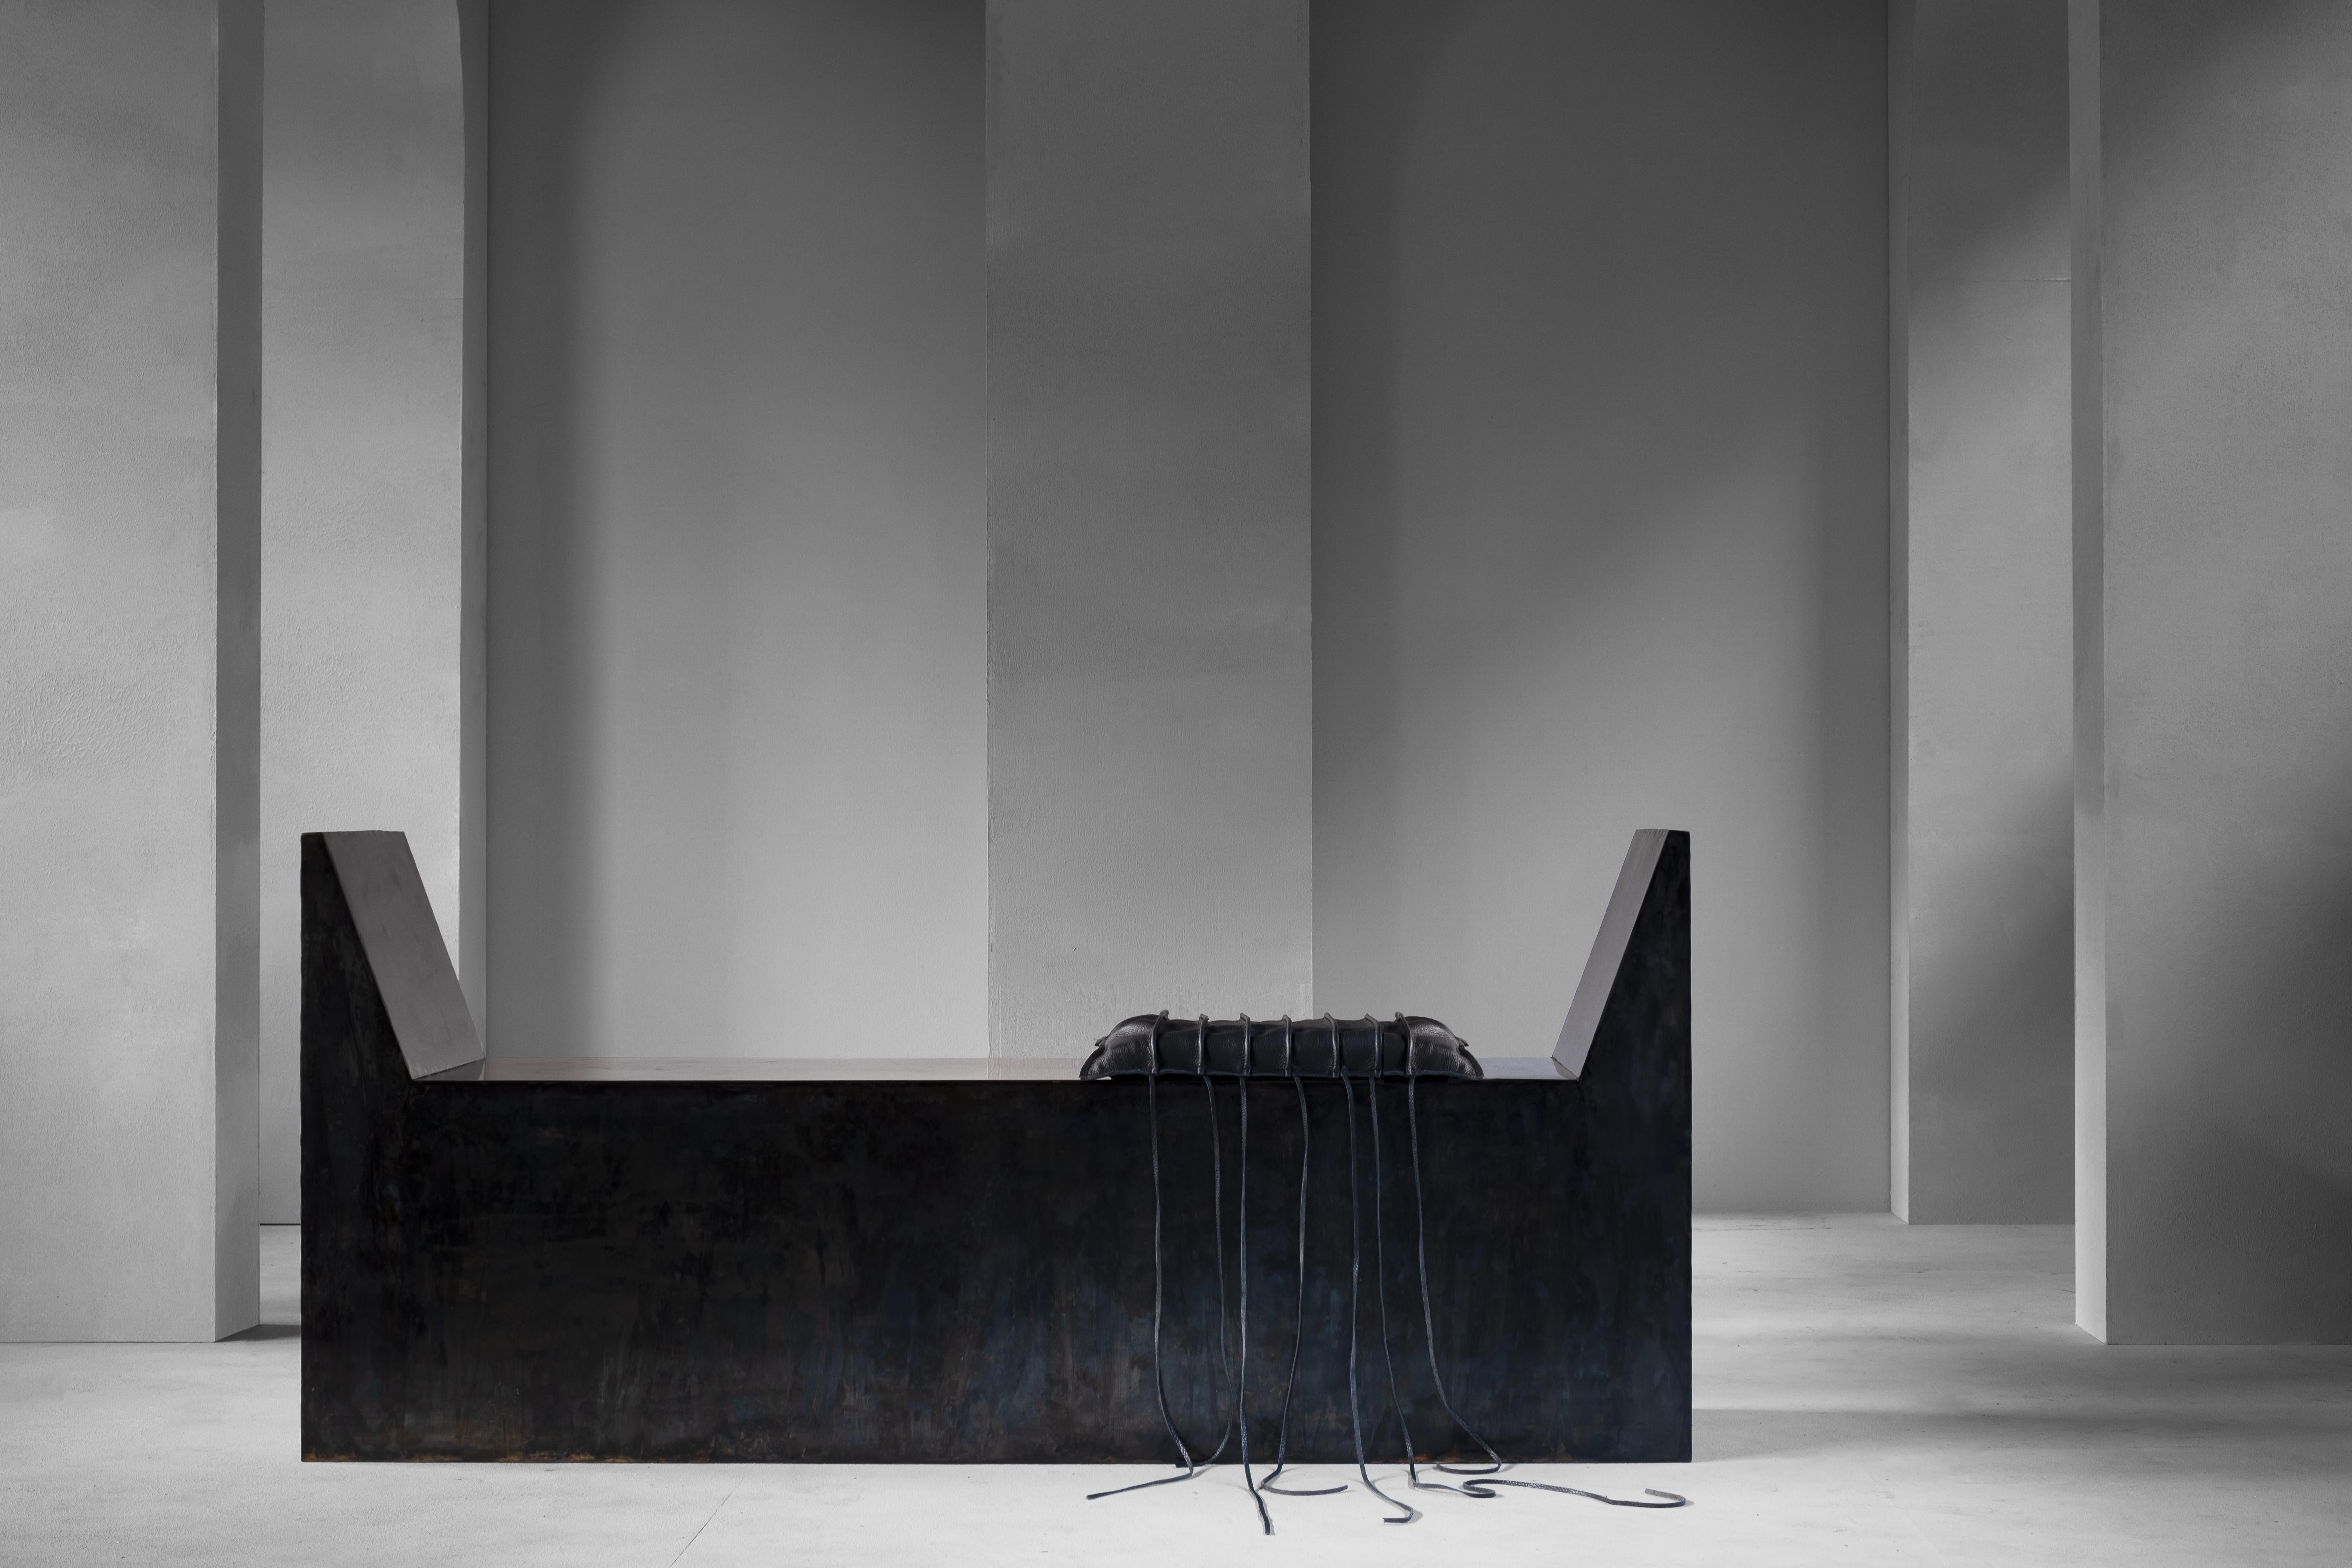 Sculptural stool, Arno Declercq

Measures:
Small: 63 cm L x 38 cm W x 69 cm H
24.8” L x 15” W x 27